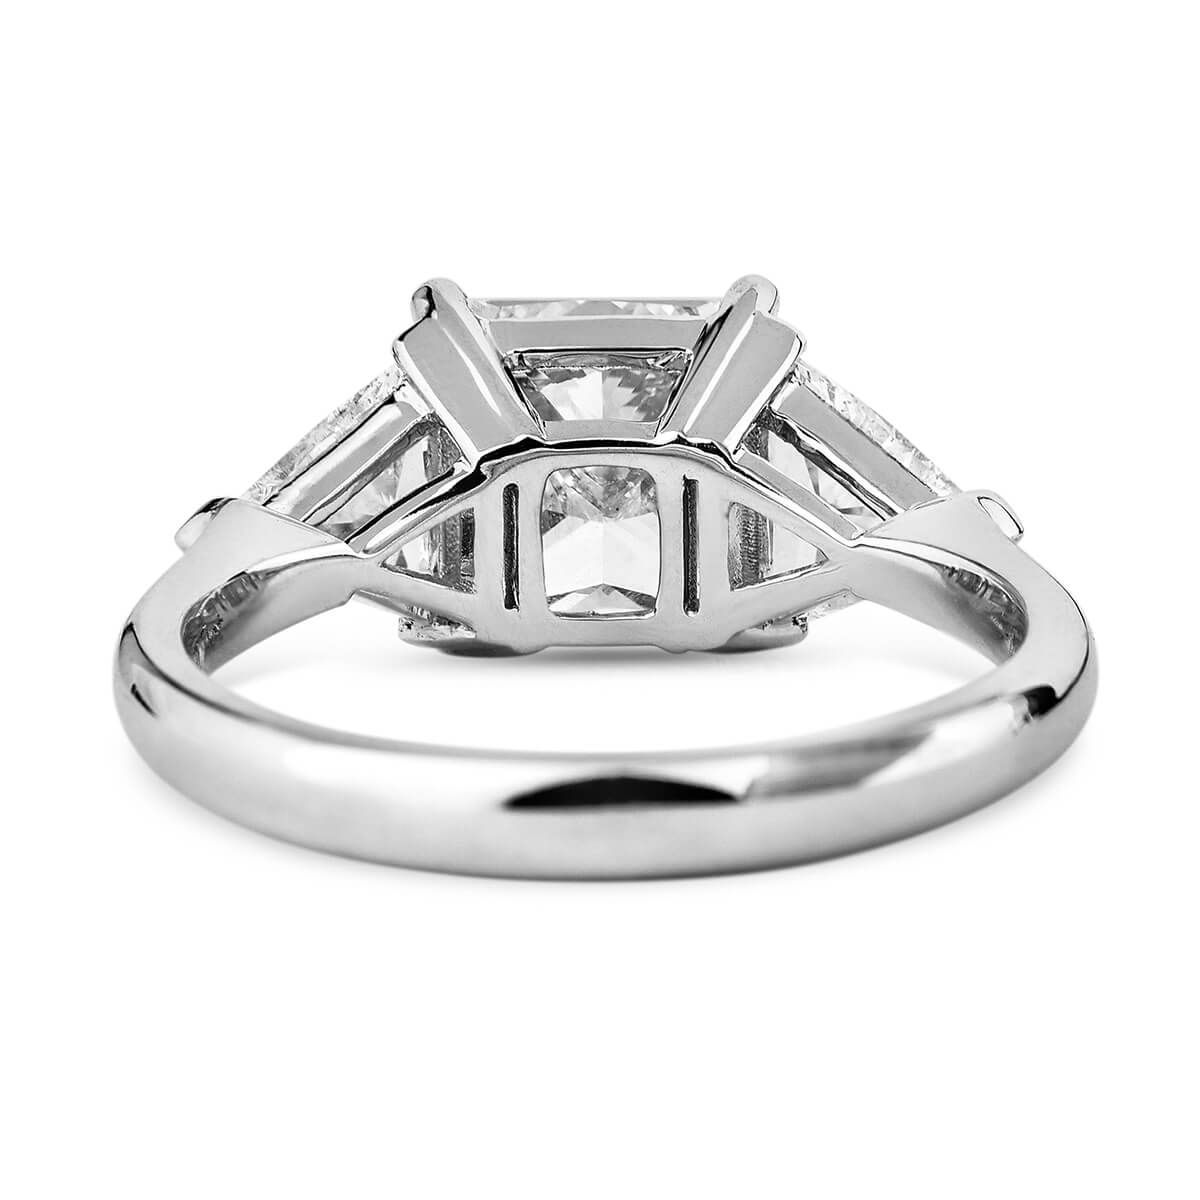  White Diamond Ring, 2.71 Ct. TW, Princess shape, GIA Certified, 6272602018